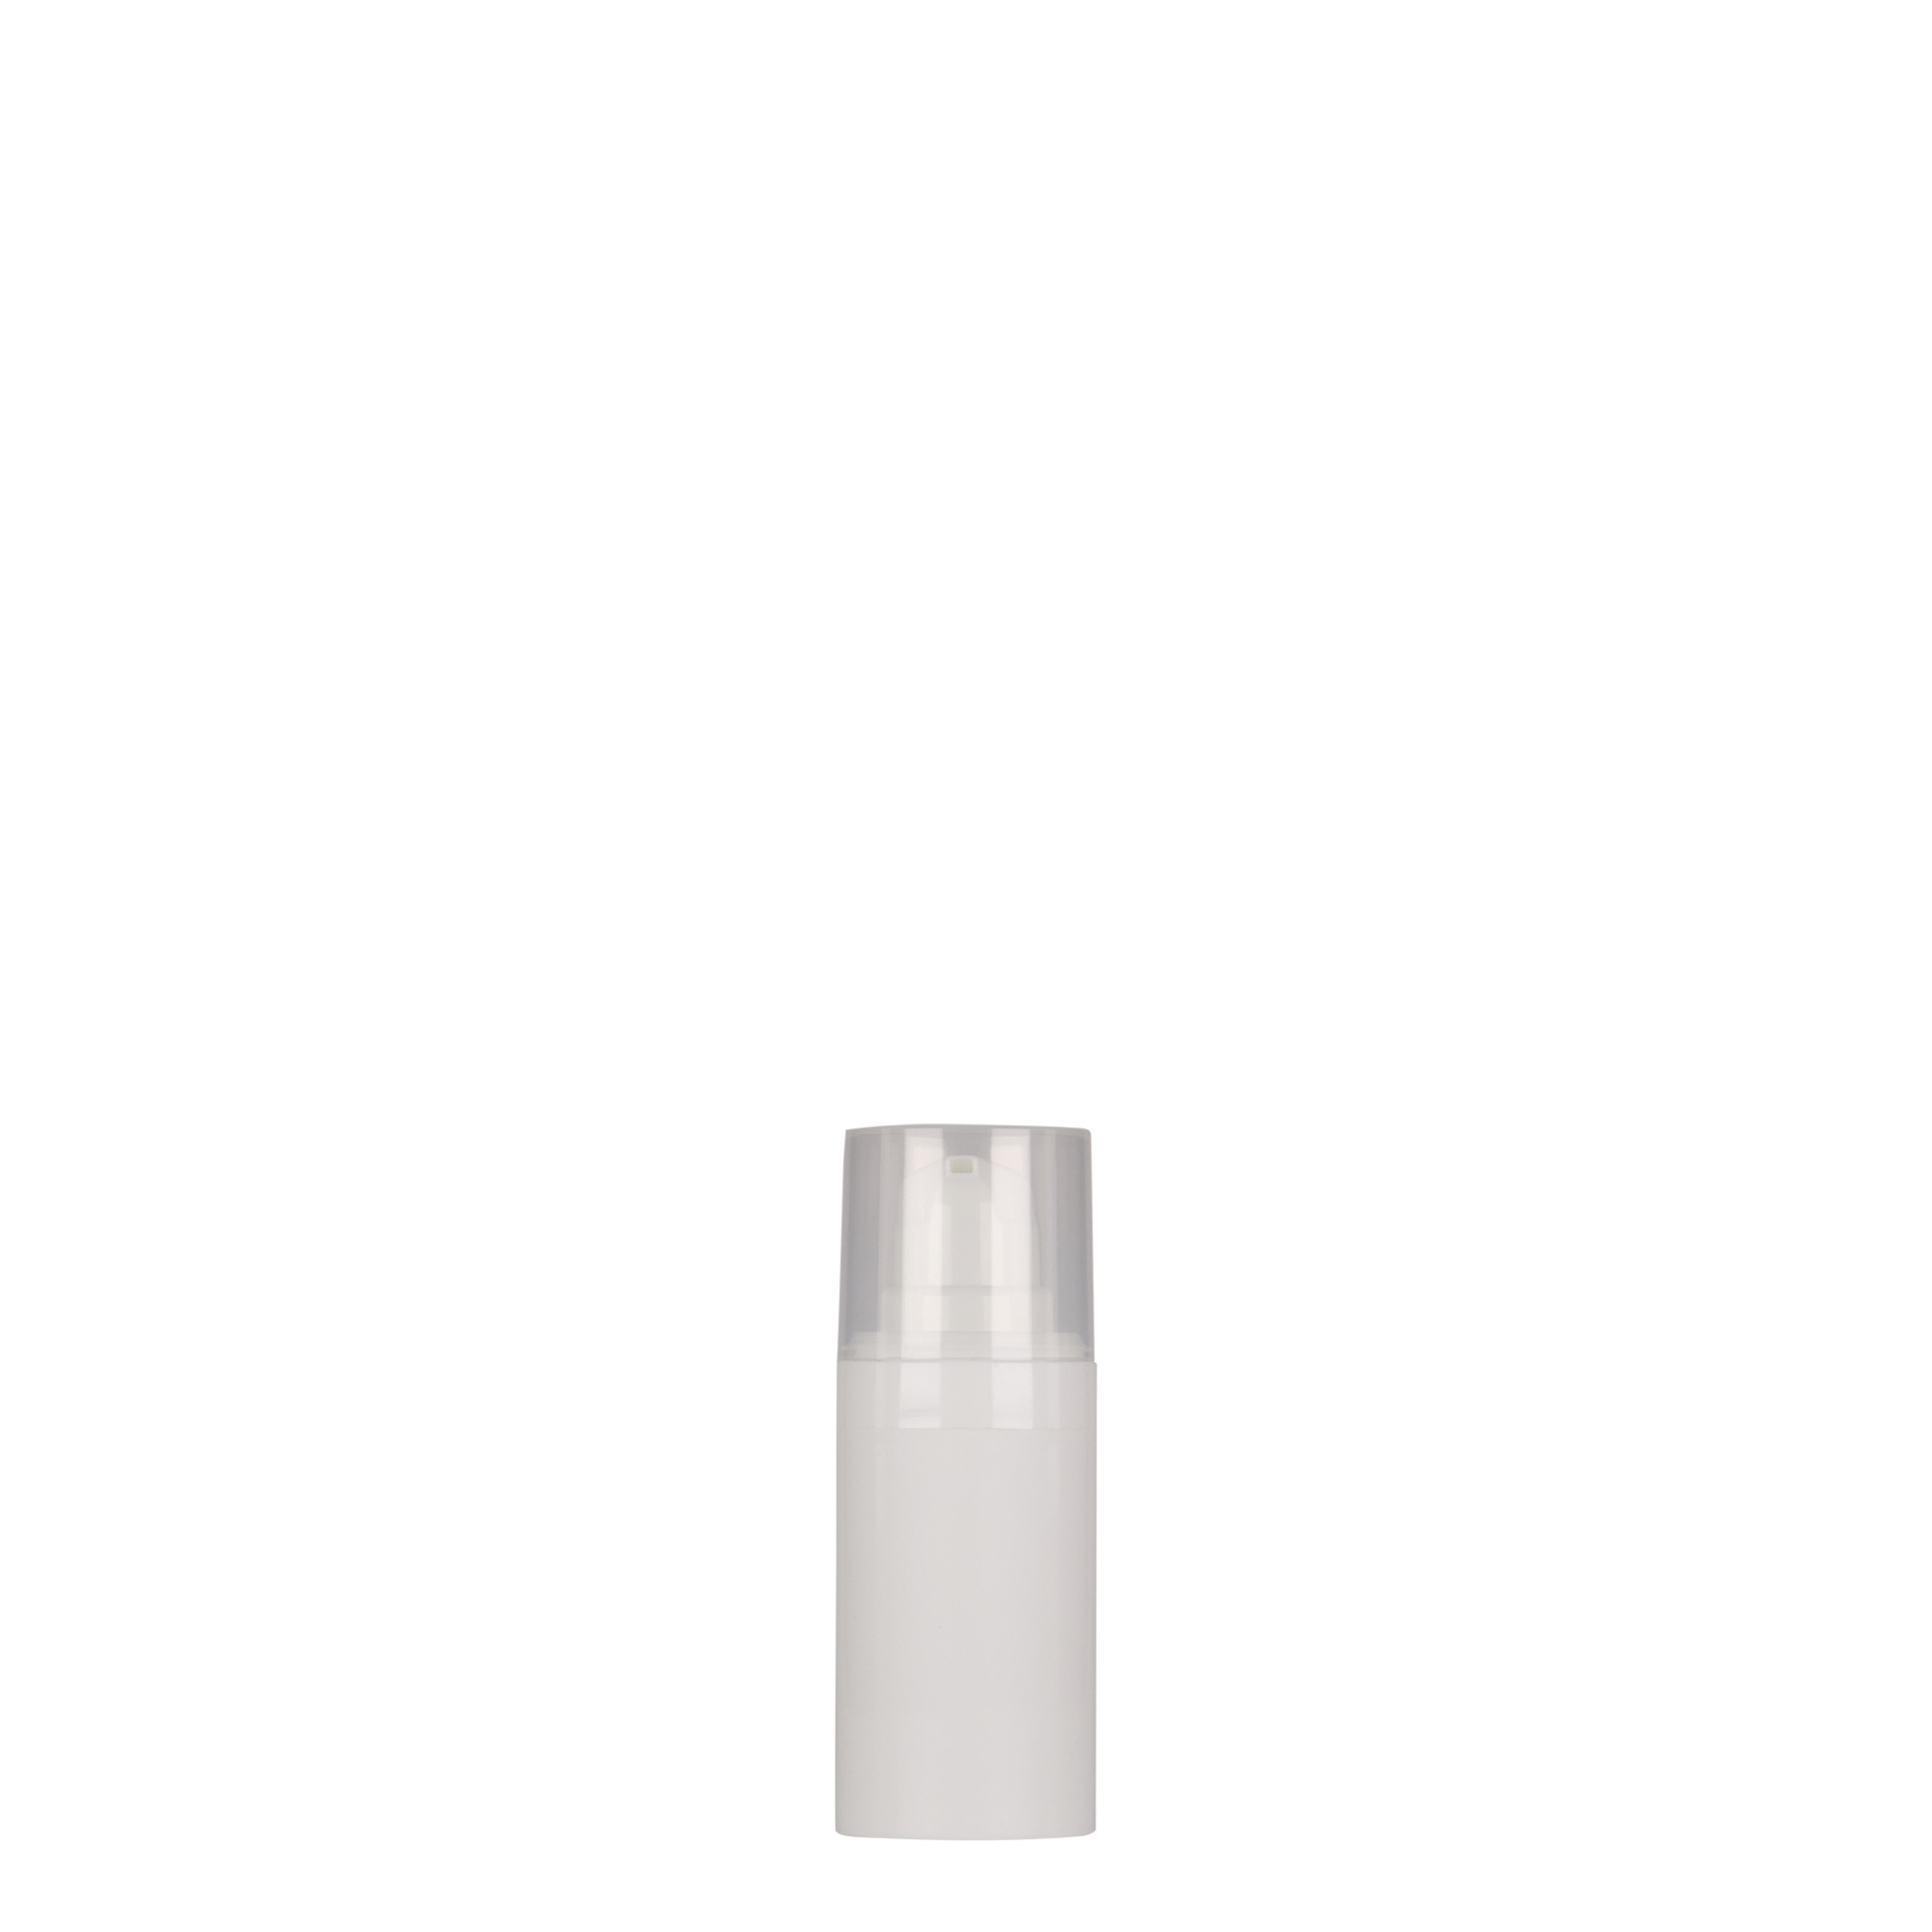 15 ml airless dispenser 'Micro', PP plastic, white